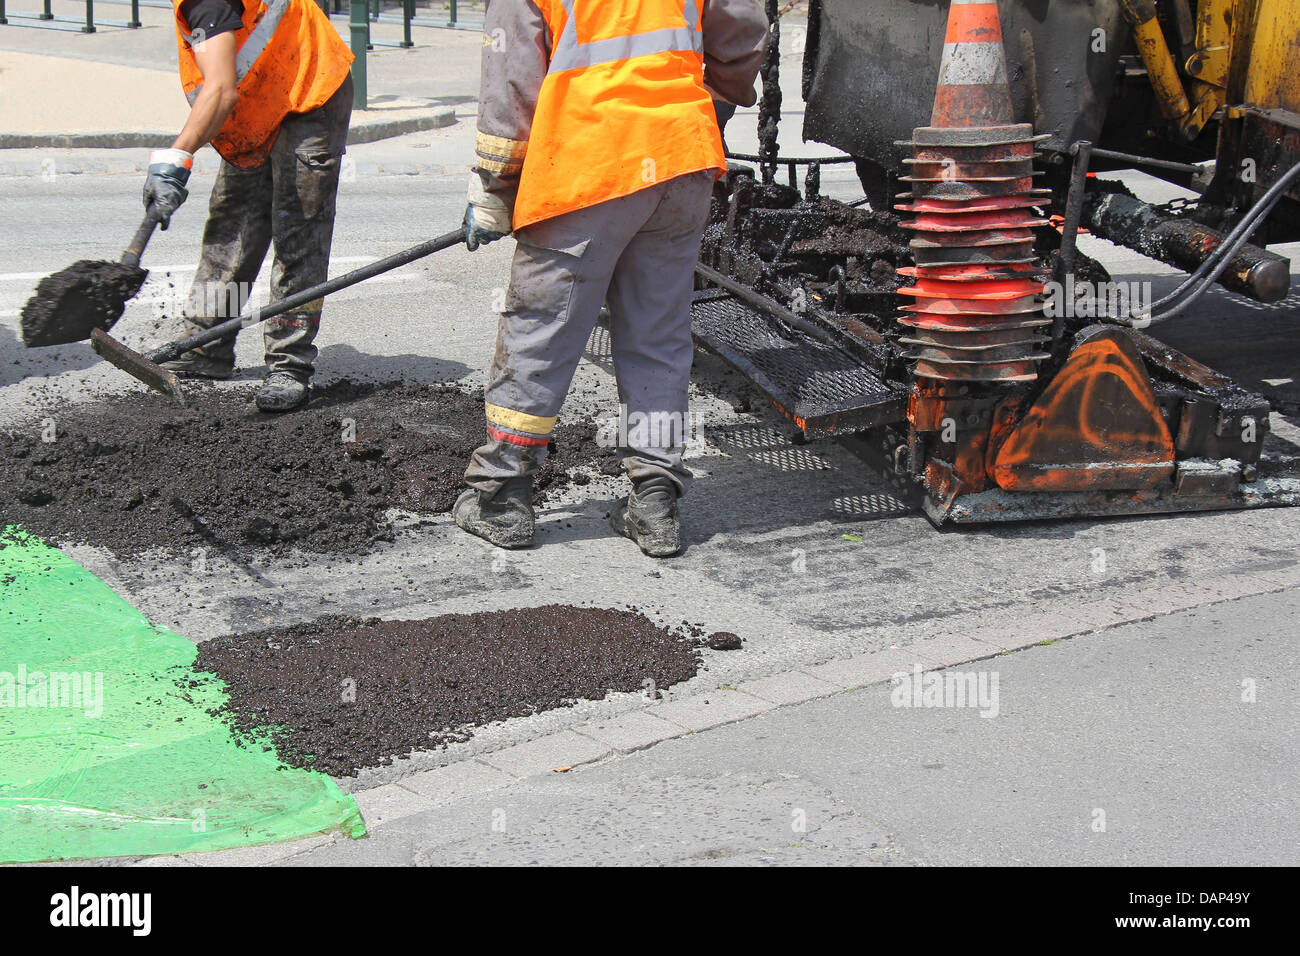 Workers on Asphalting paver machine during Road street repairing works Stock Photo